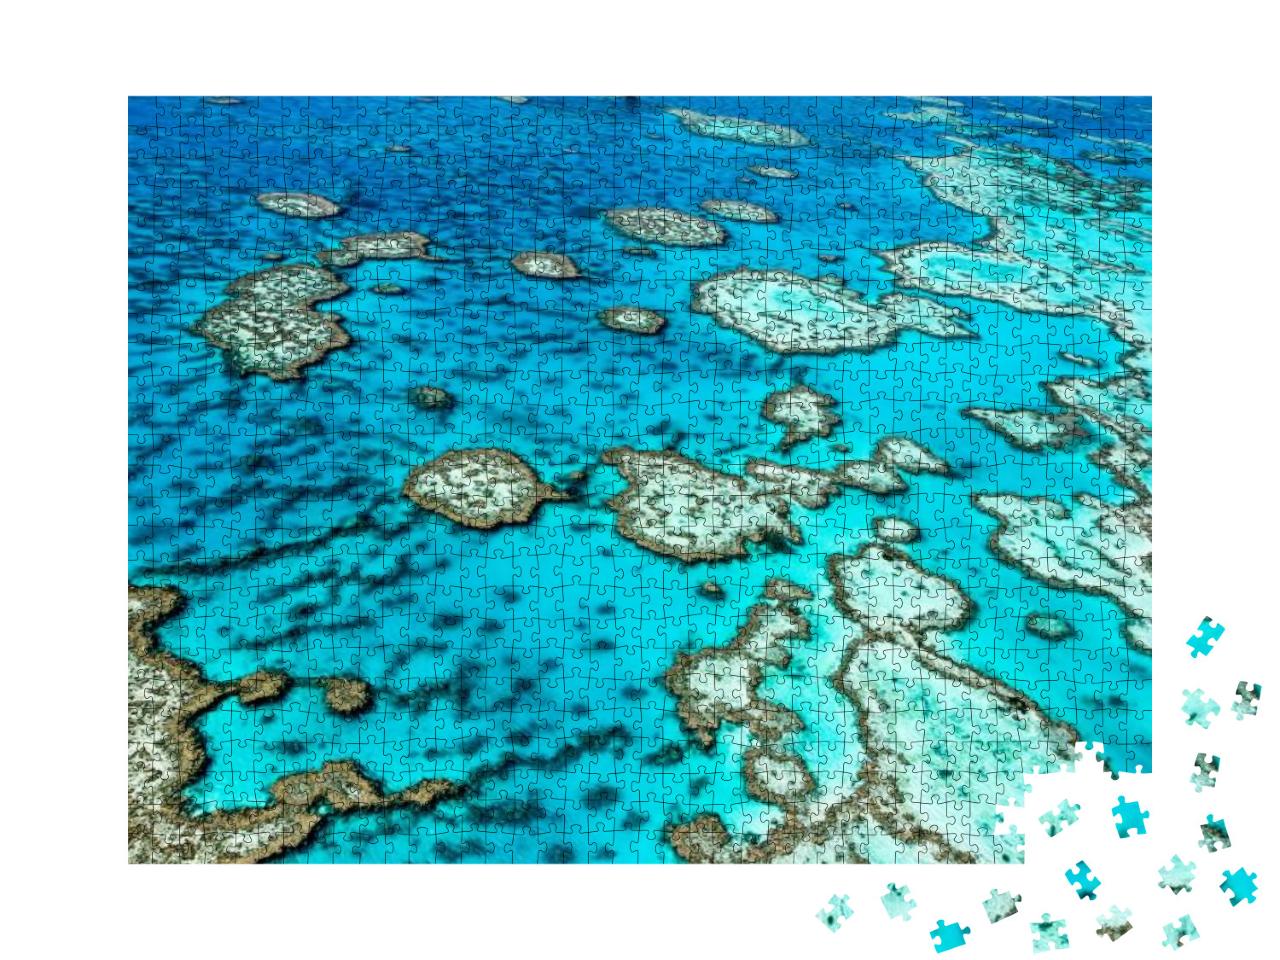 Puzzle 1000 Teile „Das Great Barrier Reef in Queensland, Australien“